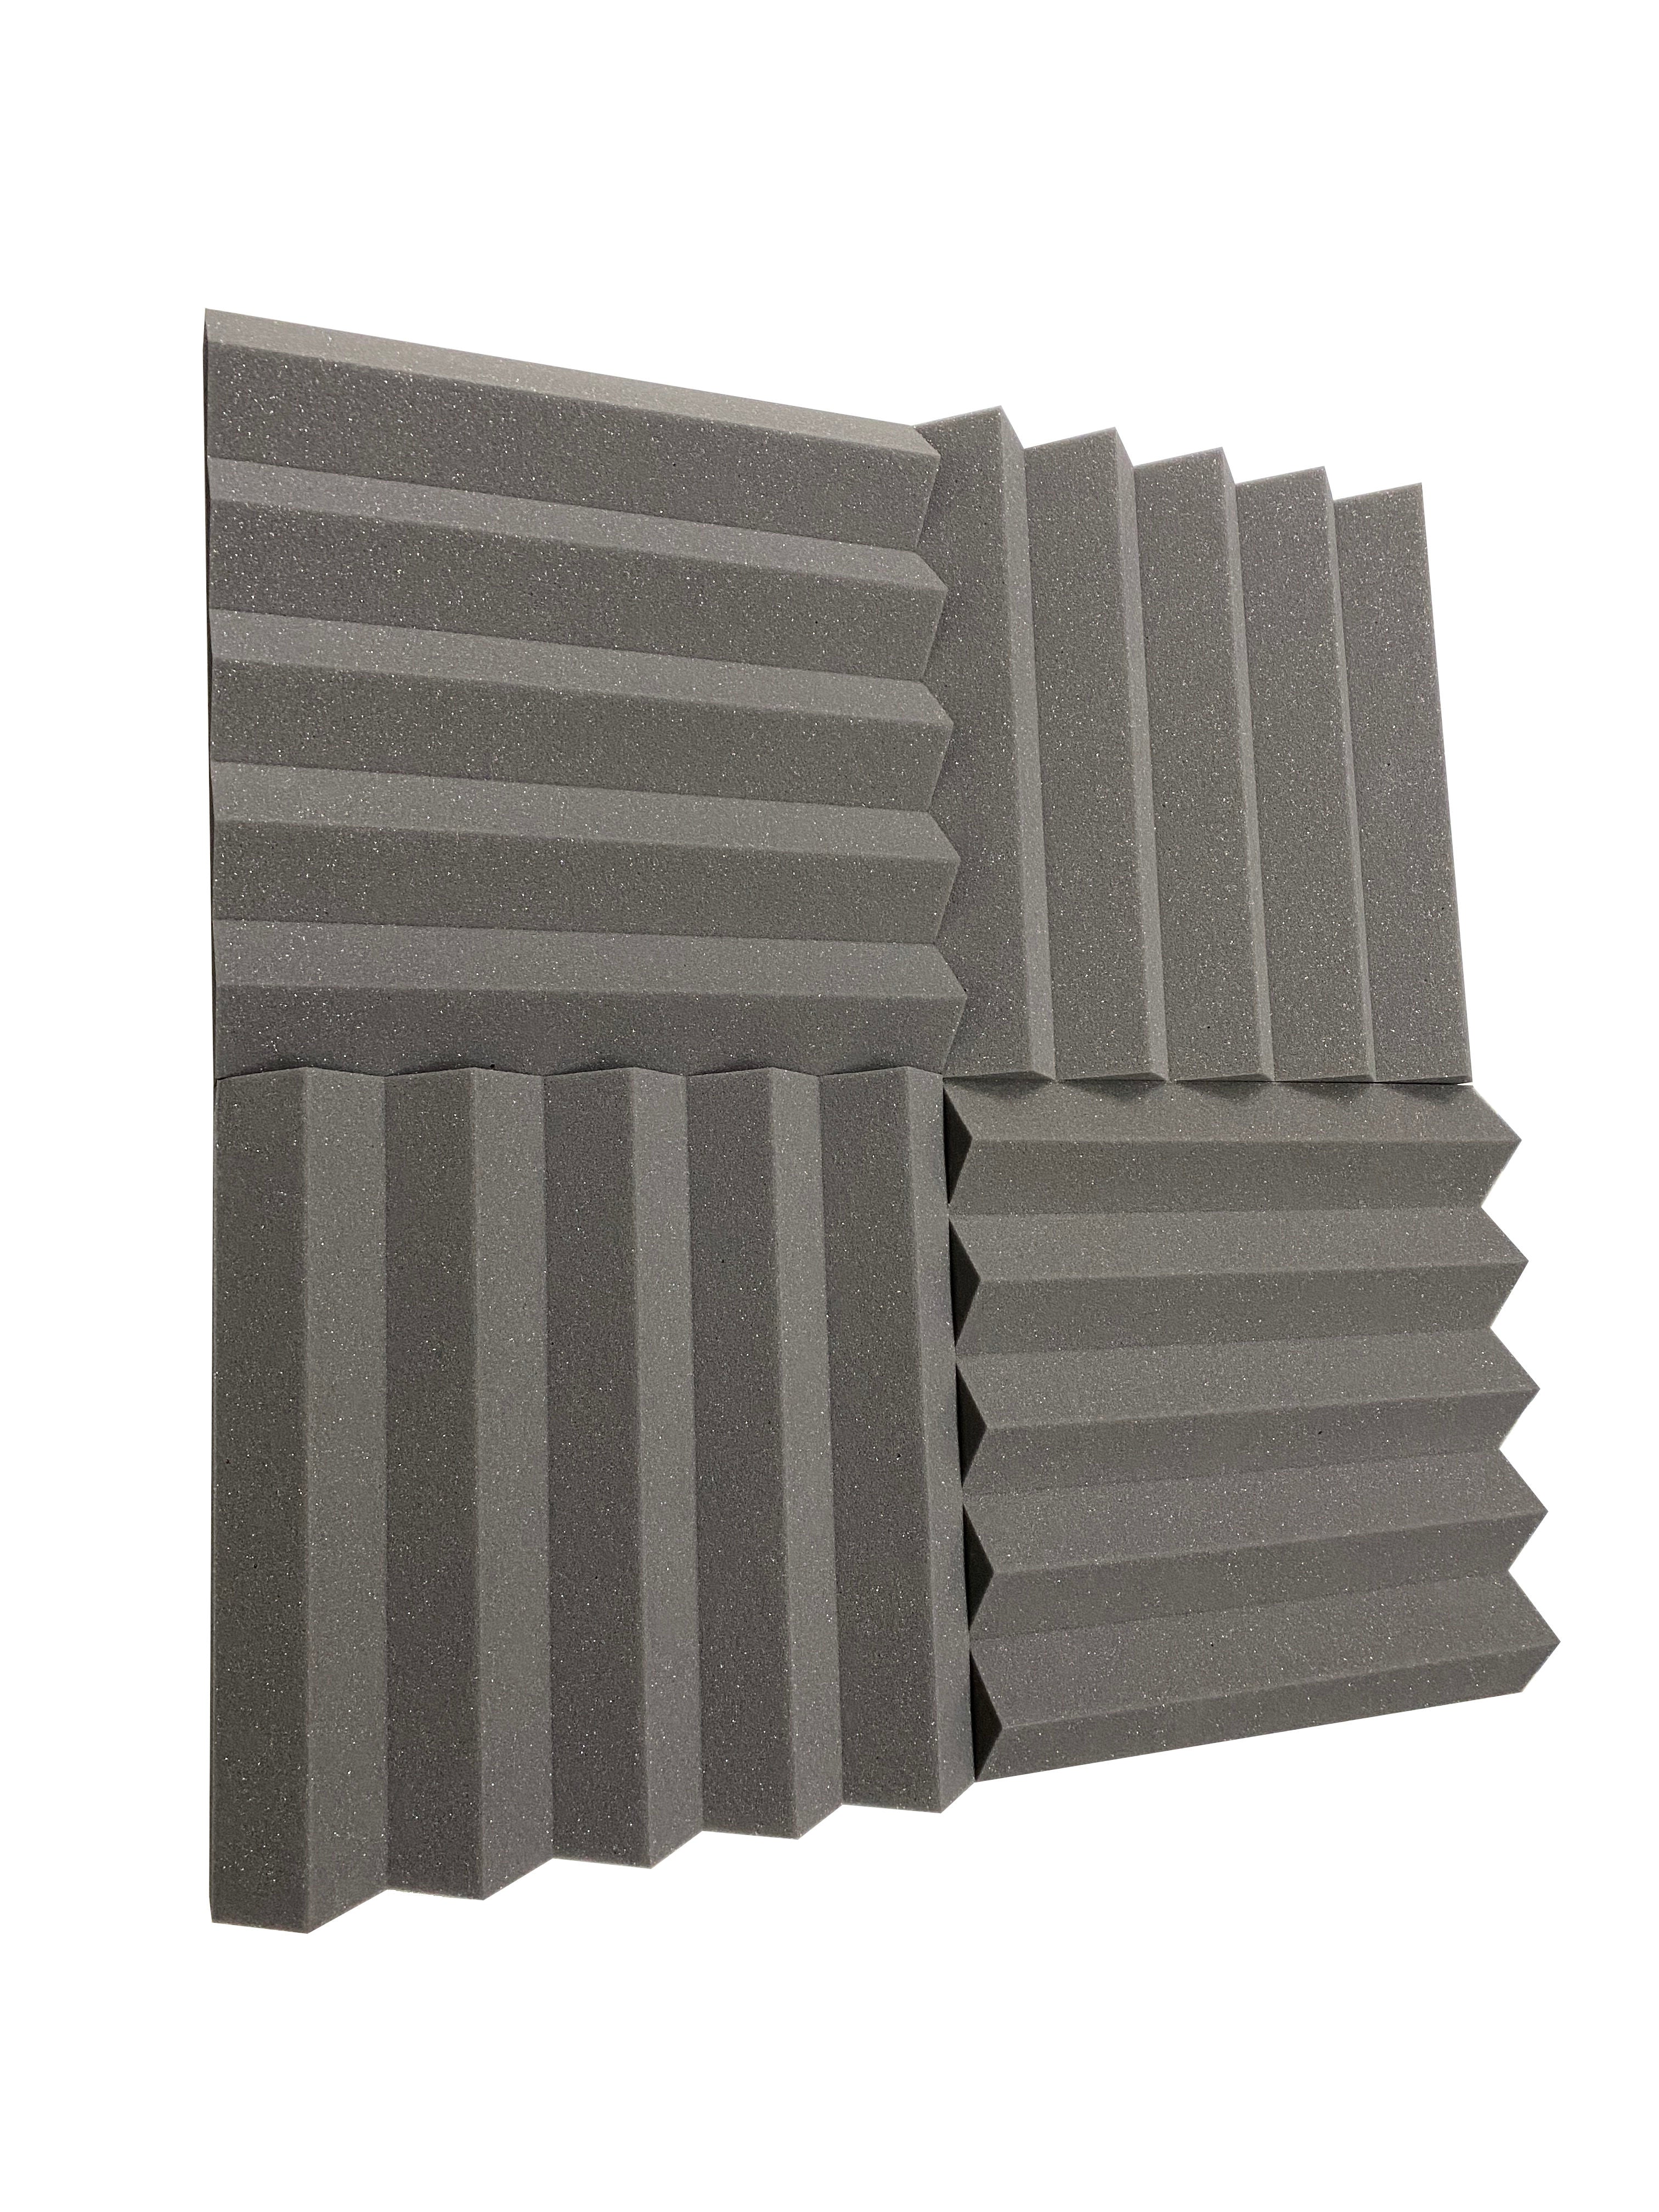 Wedge PRO 15" Acoustic Studio Foam Tile Kit